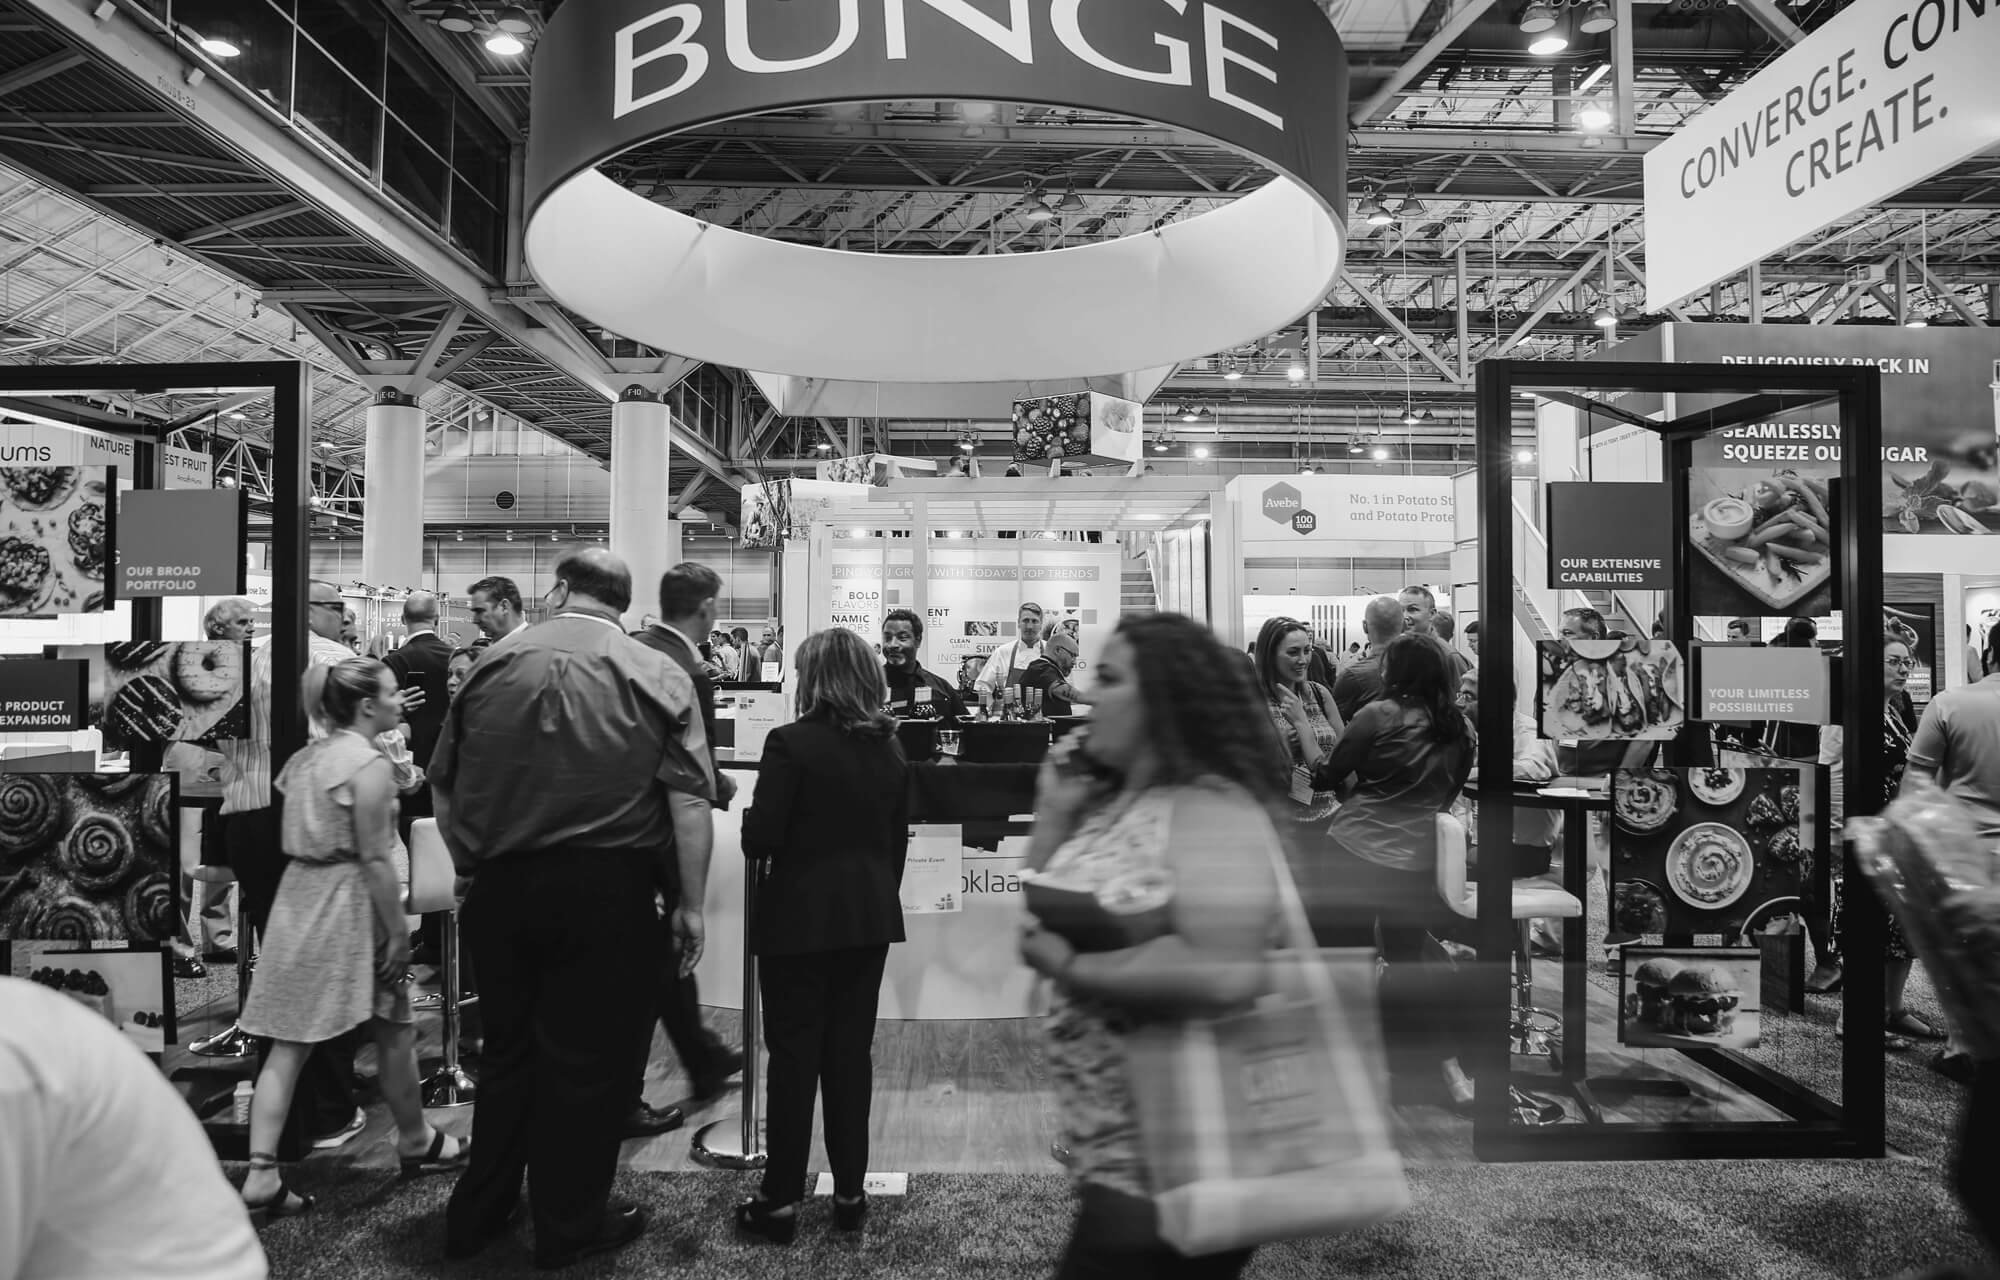 Bunge trade show booth environmental design